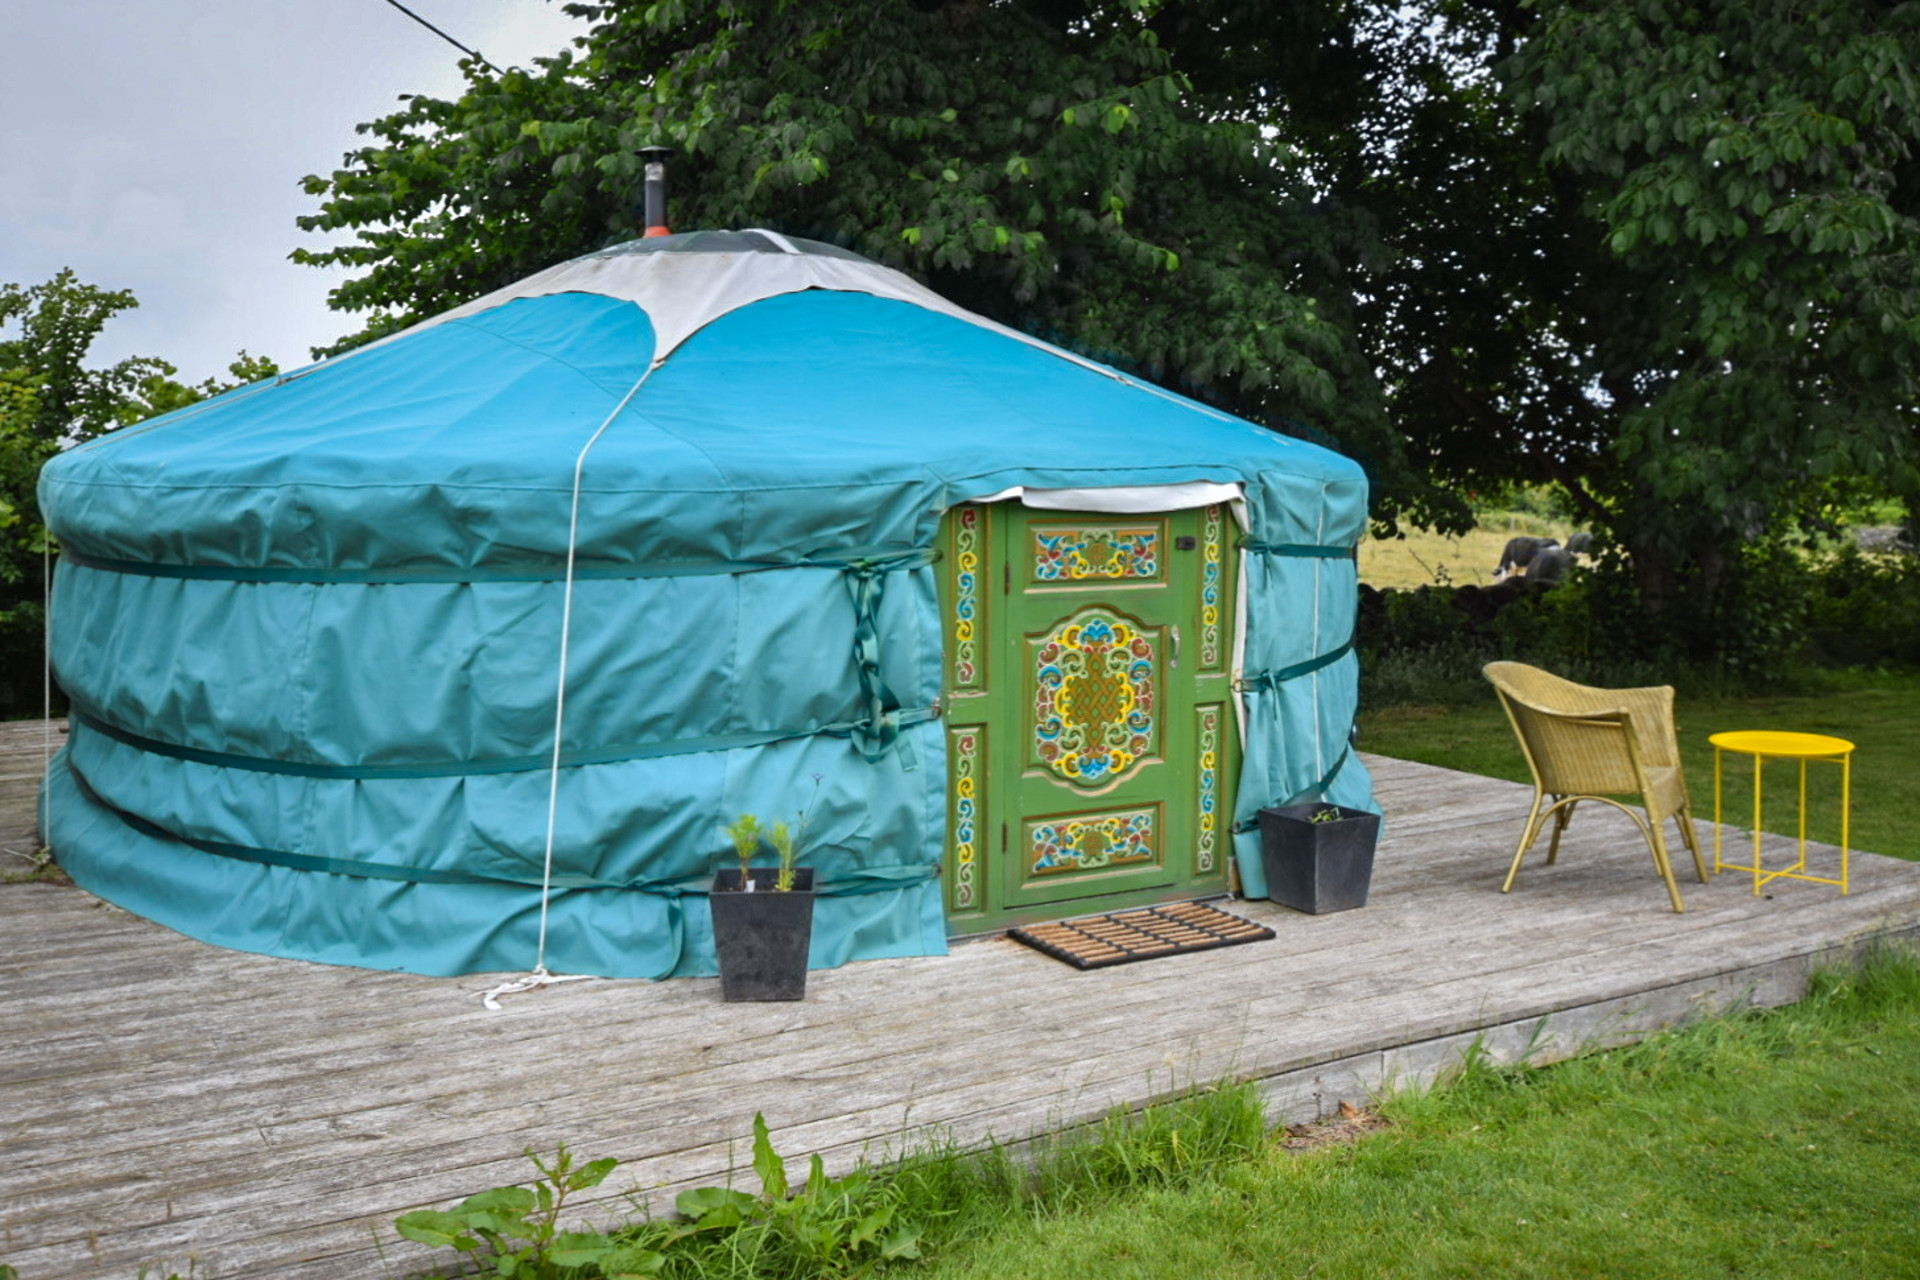 Background image - The Yurt